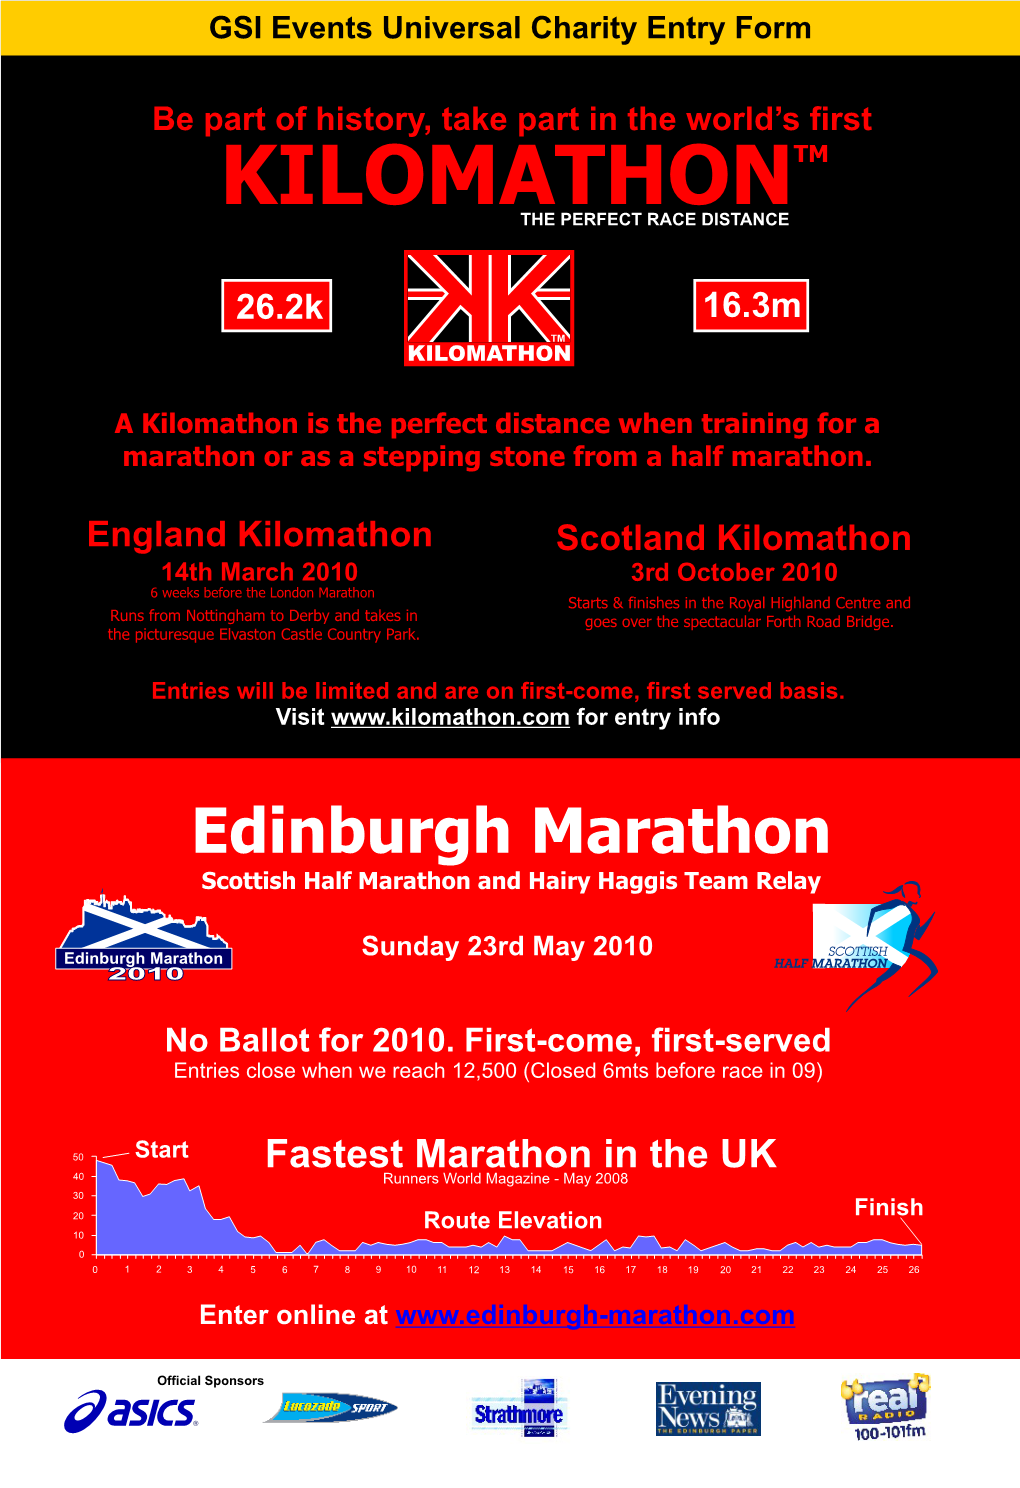 Edinburgh Marathon Scottish Half Marathon and Hairy Haggis Team Relay